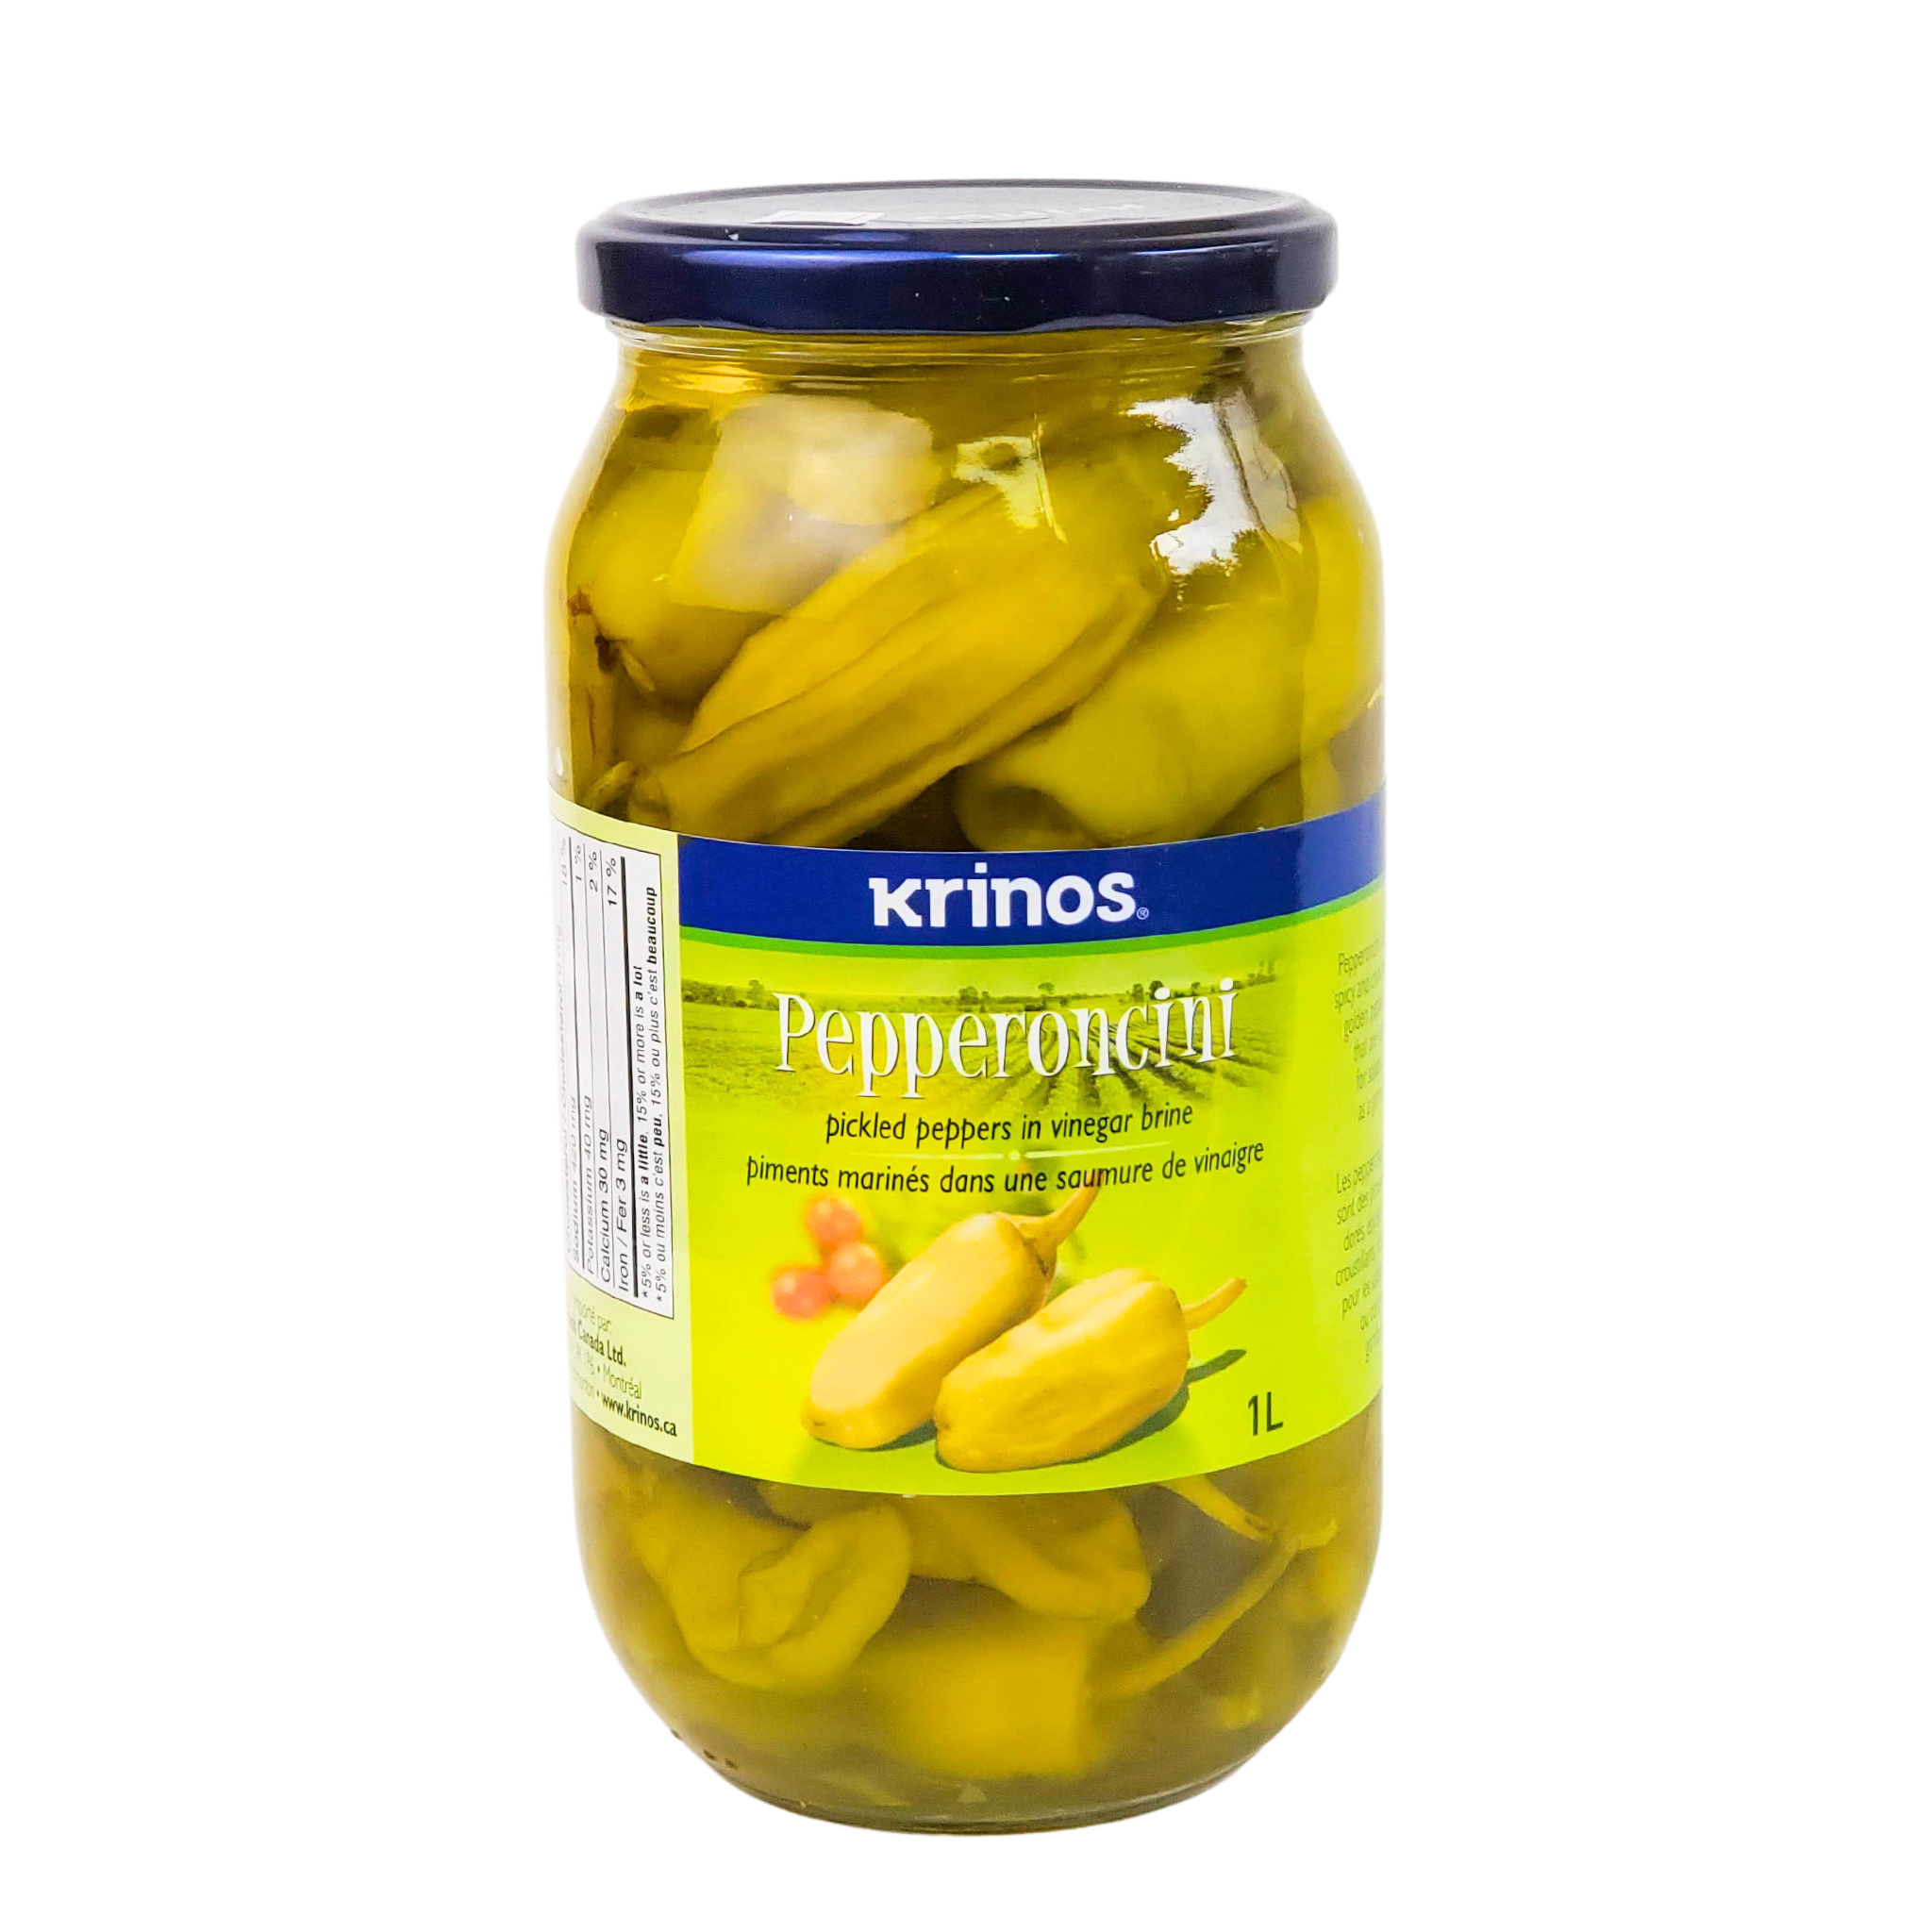 Krinos Pepperoncini  Pickled Peppers in Vinegar Brine 1L